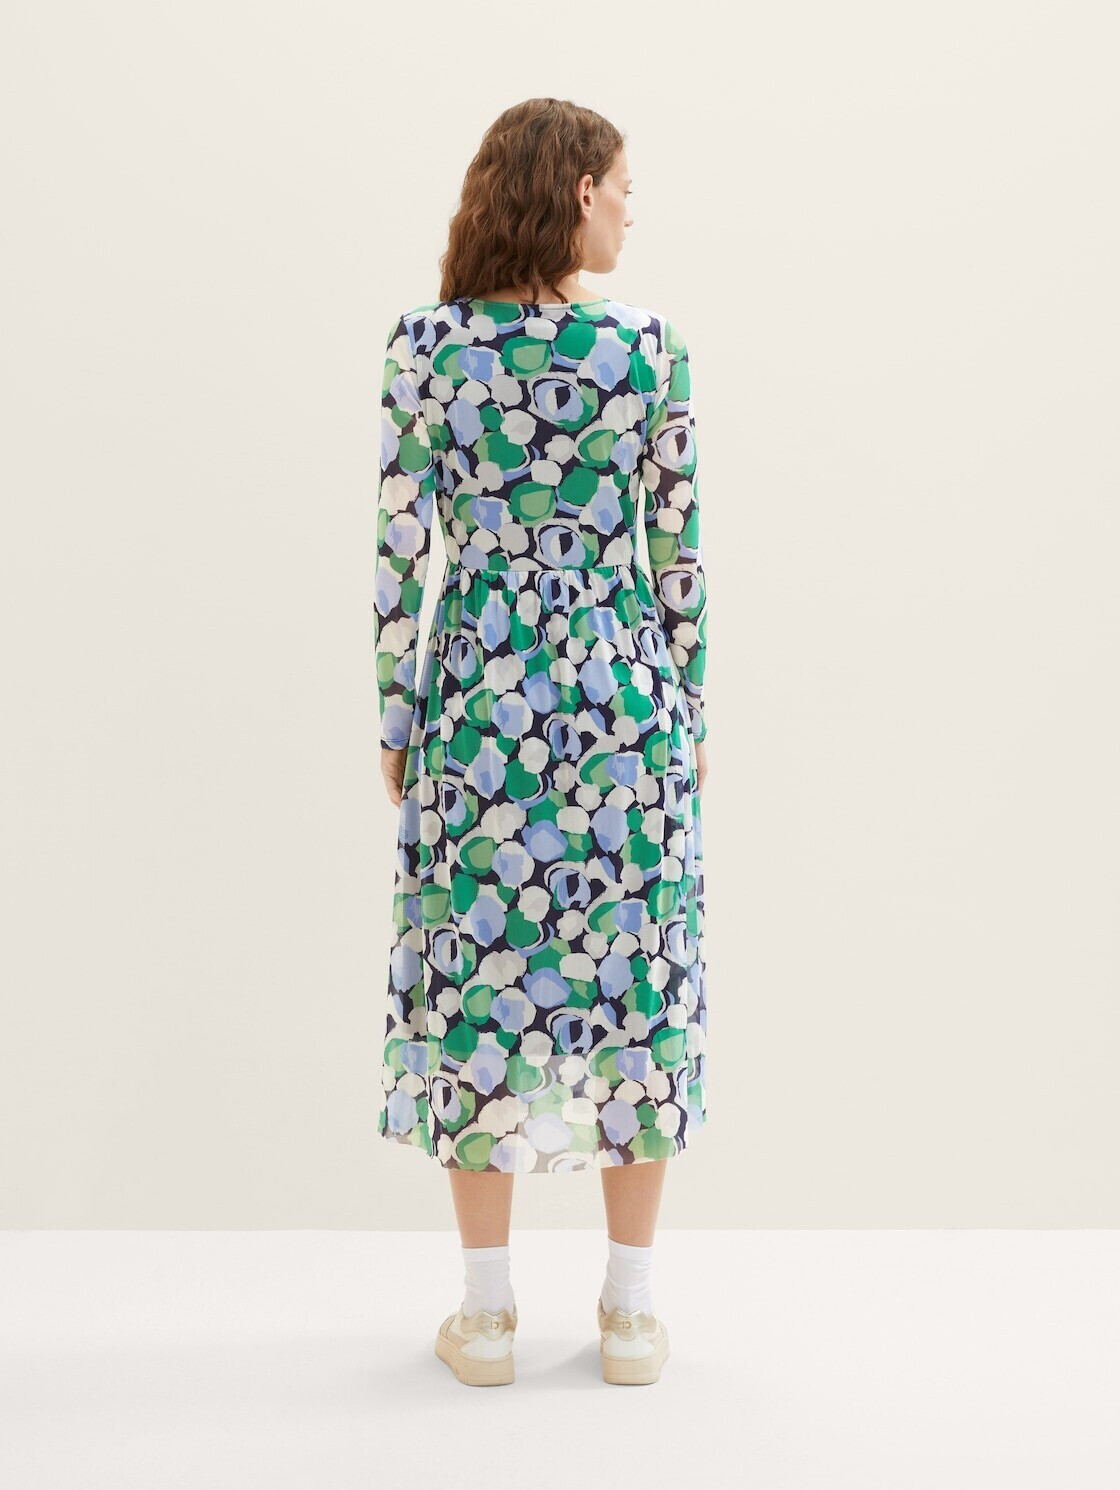 Tom Tailor Gemustertes Kleid (1035233) green flower design ab 48,55 € |  Preisvergleich bei